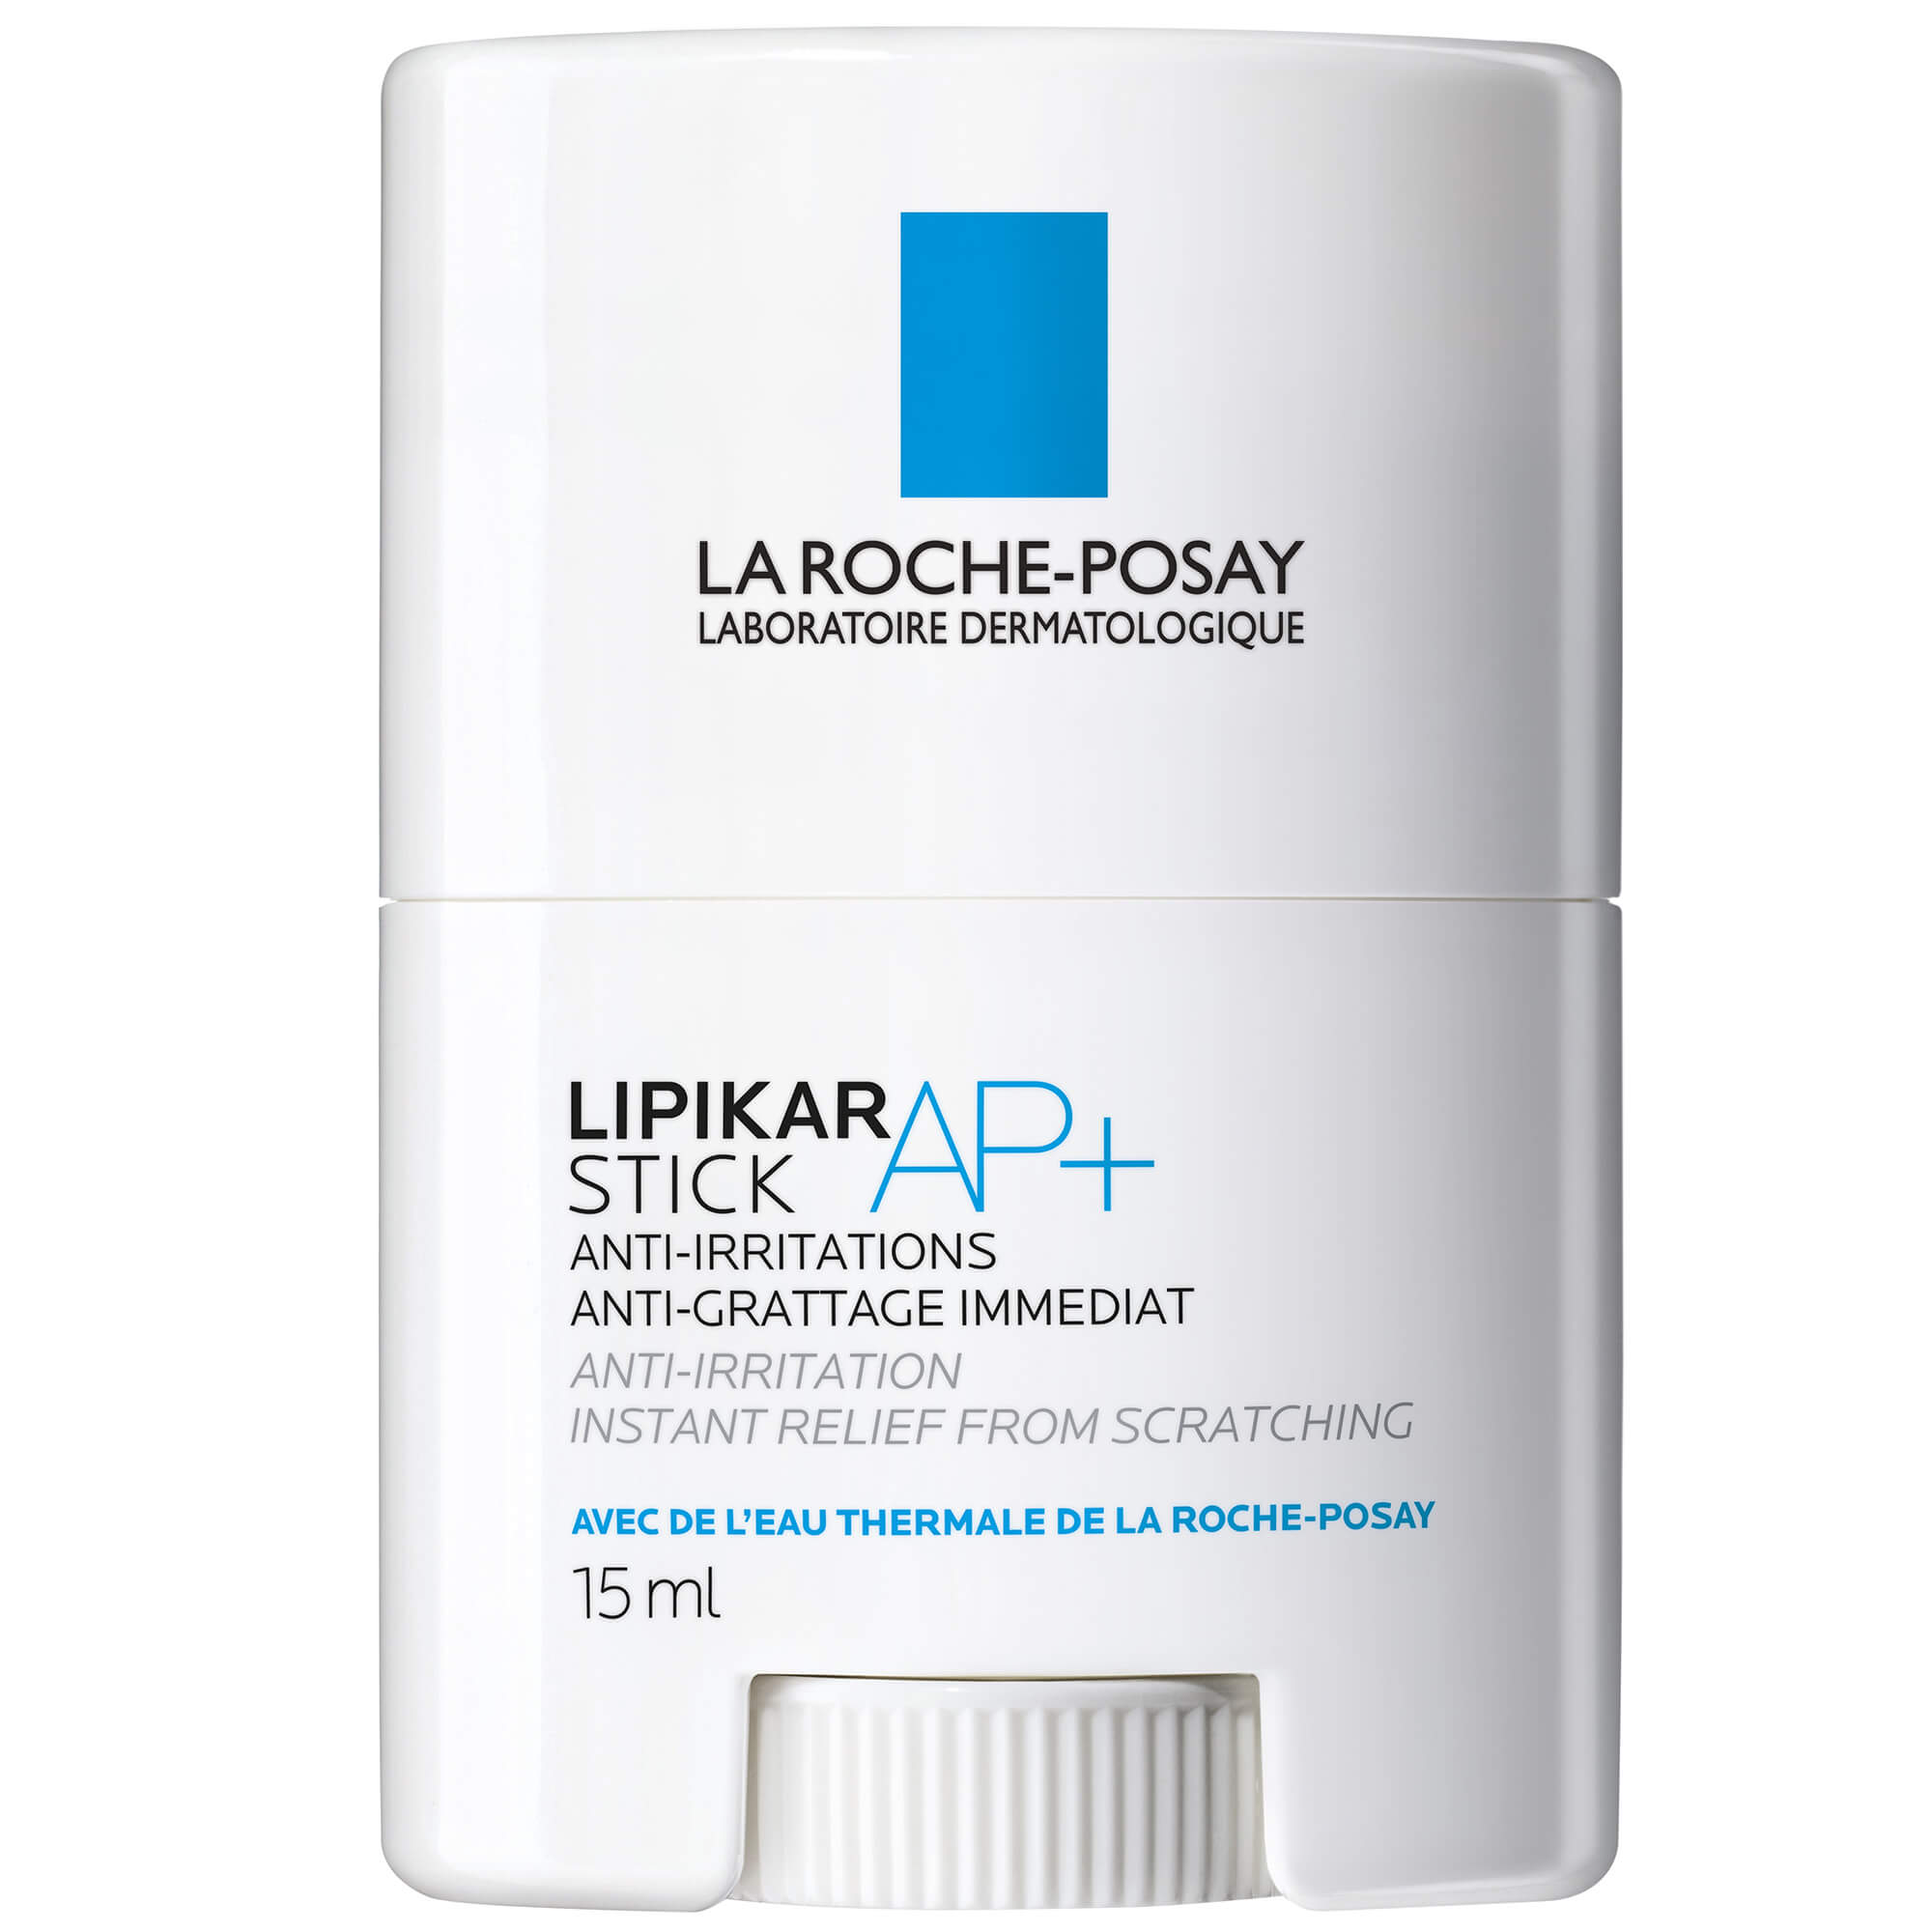 La Roche-Posay Lipikar Stick AP+ Stick Κατά του Κνησμού, των Ερεθισμών για Δέρματα με Τάση Ατοπίας 15ml